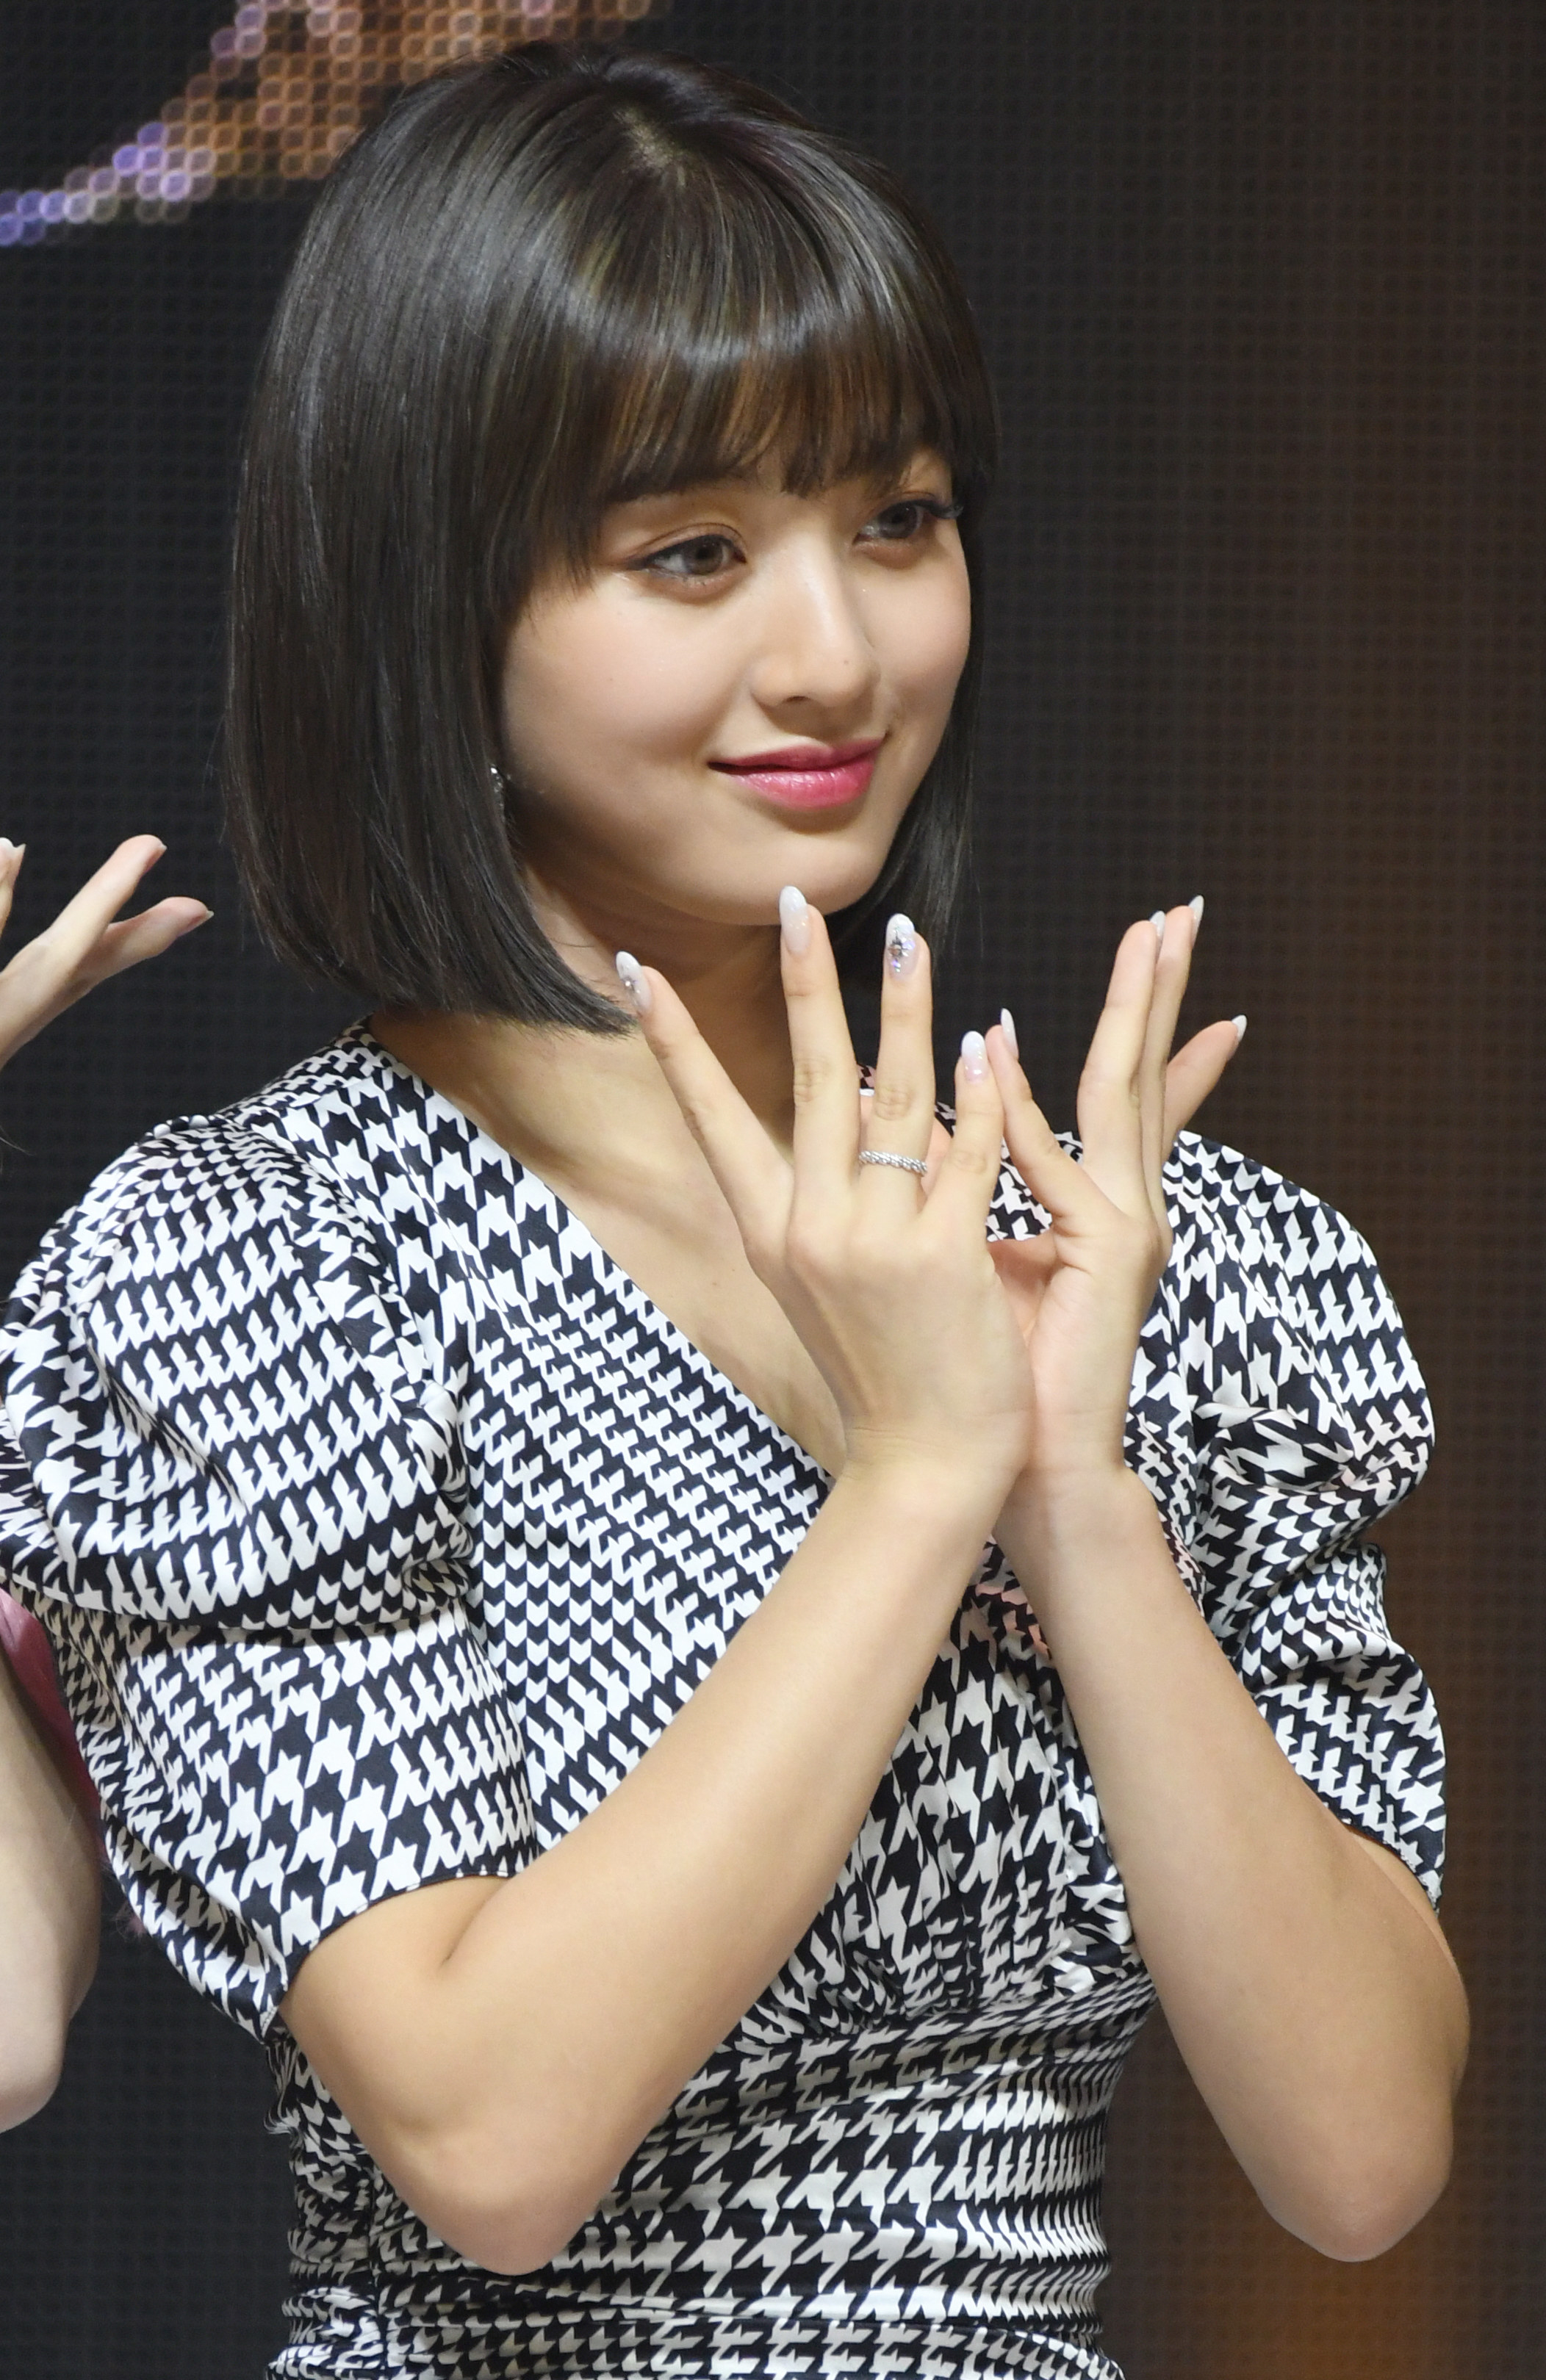 Jihyo holding her hands up like a flower